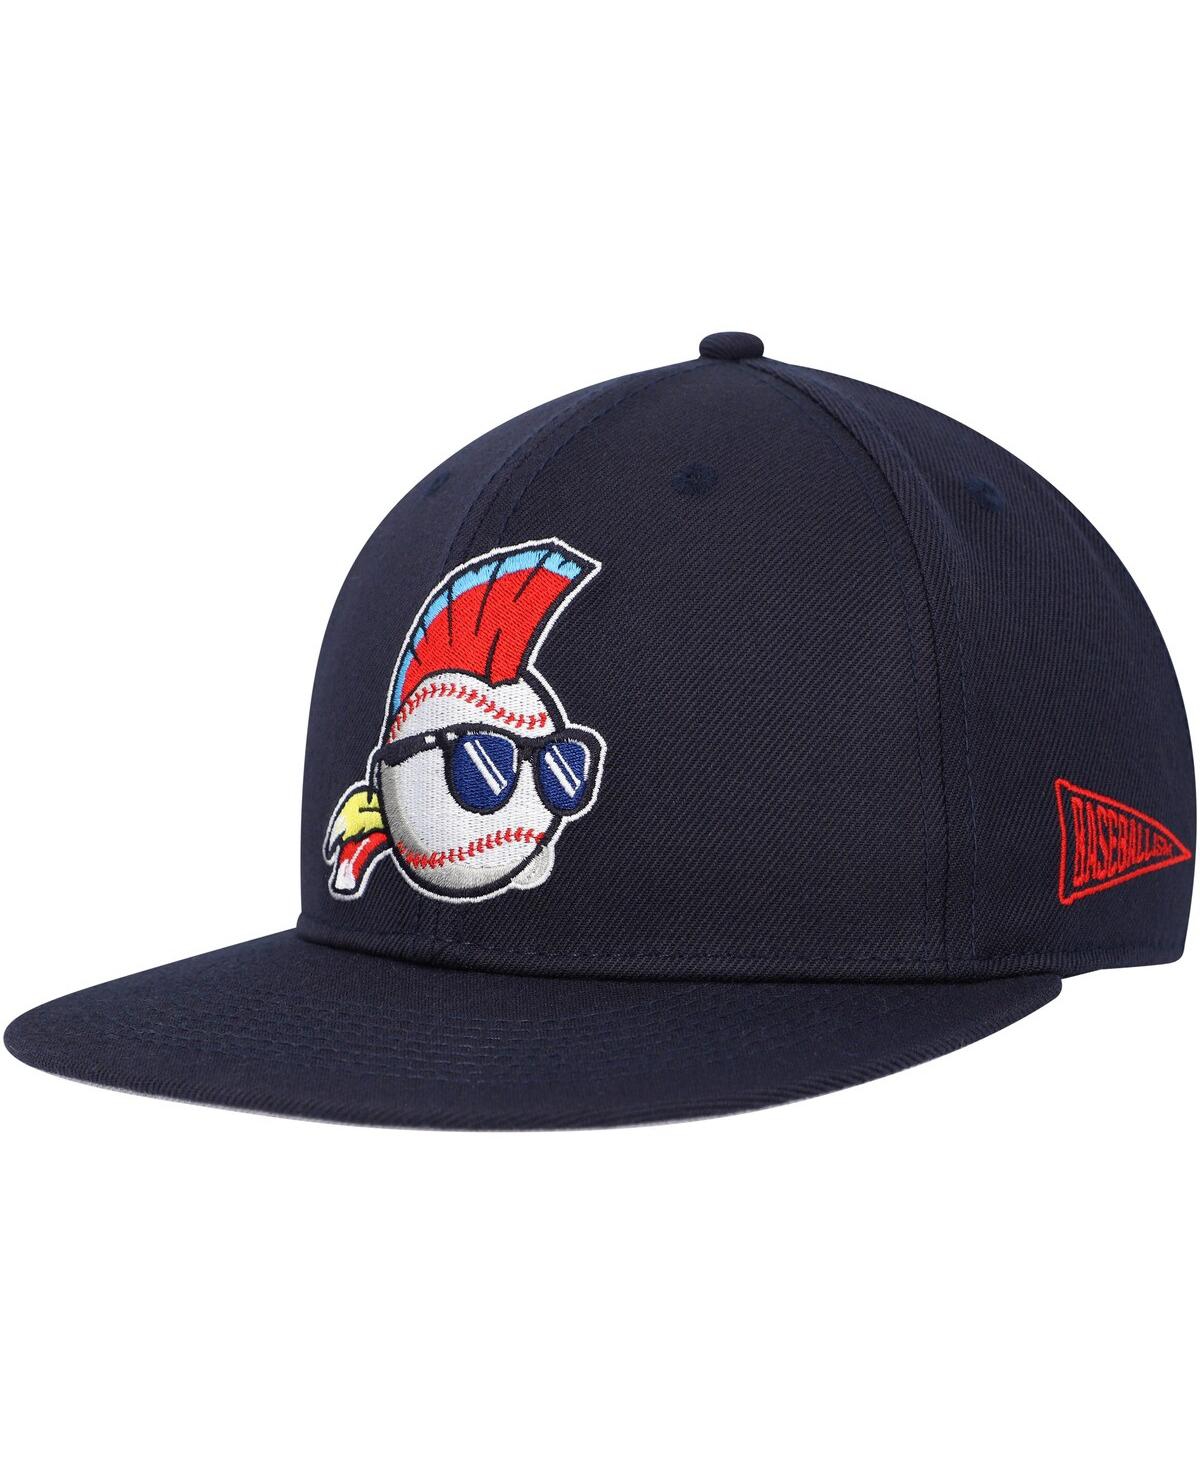 Baseballism Men's And Women's  Navy Major League Fitted Hat